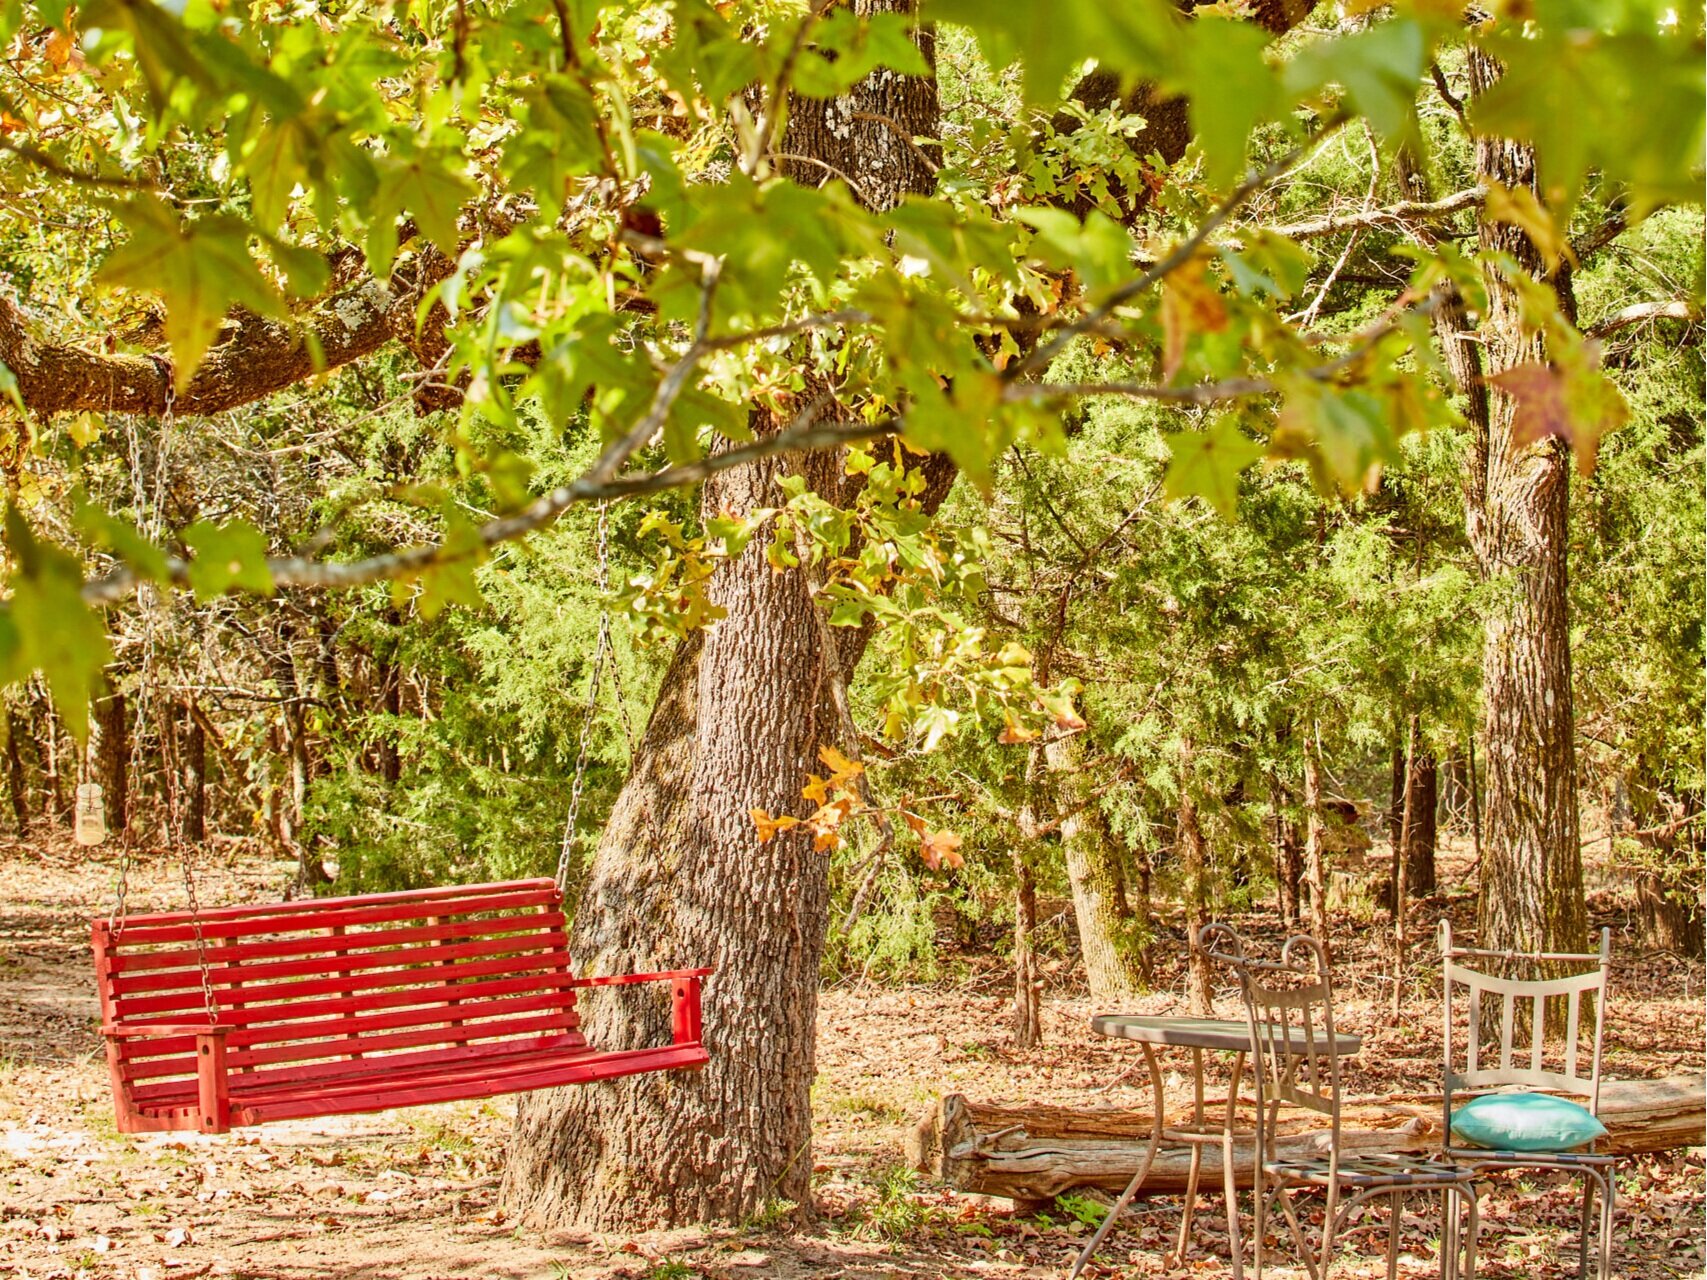 Meadow++Big+Oak+Red+Swing+Iron+Table+2+Chairs+Leaves++GREAT++blackmon_201004_9466.jpg